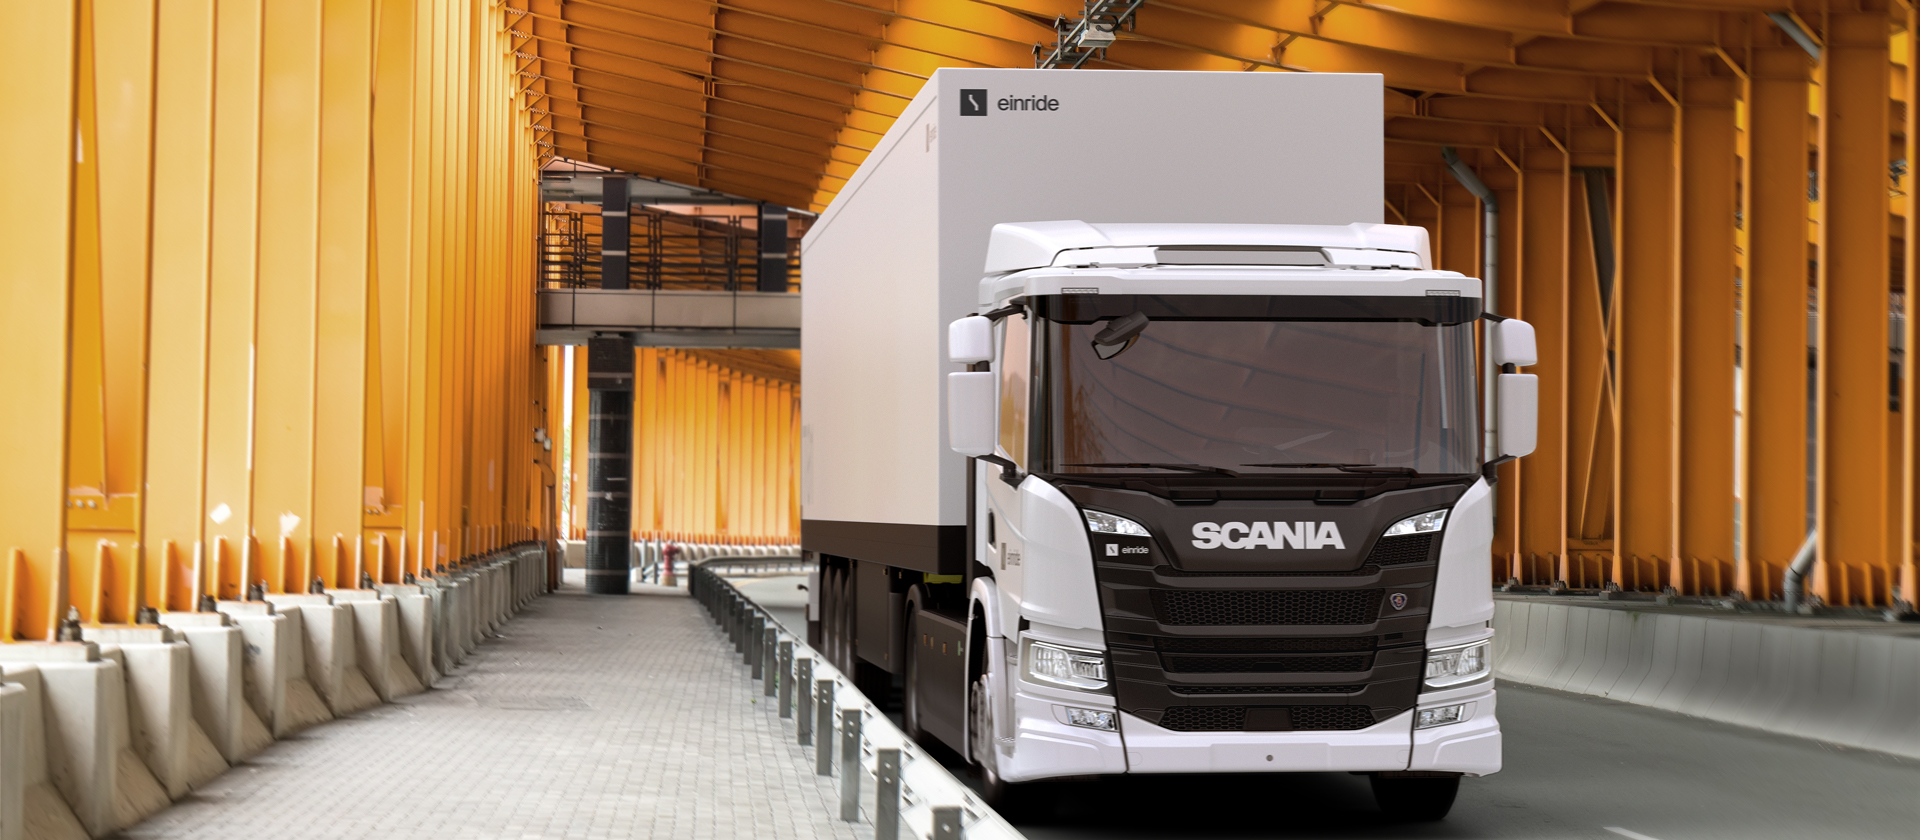 Scania: 110 autocarri elettrici per l’azienda Einride